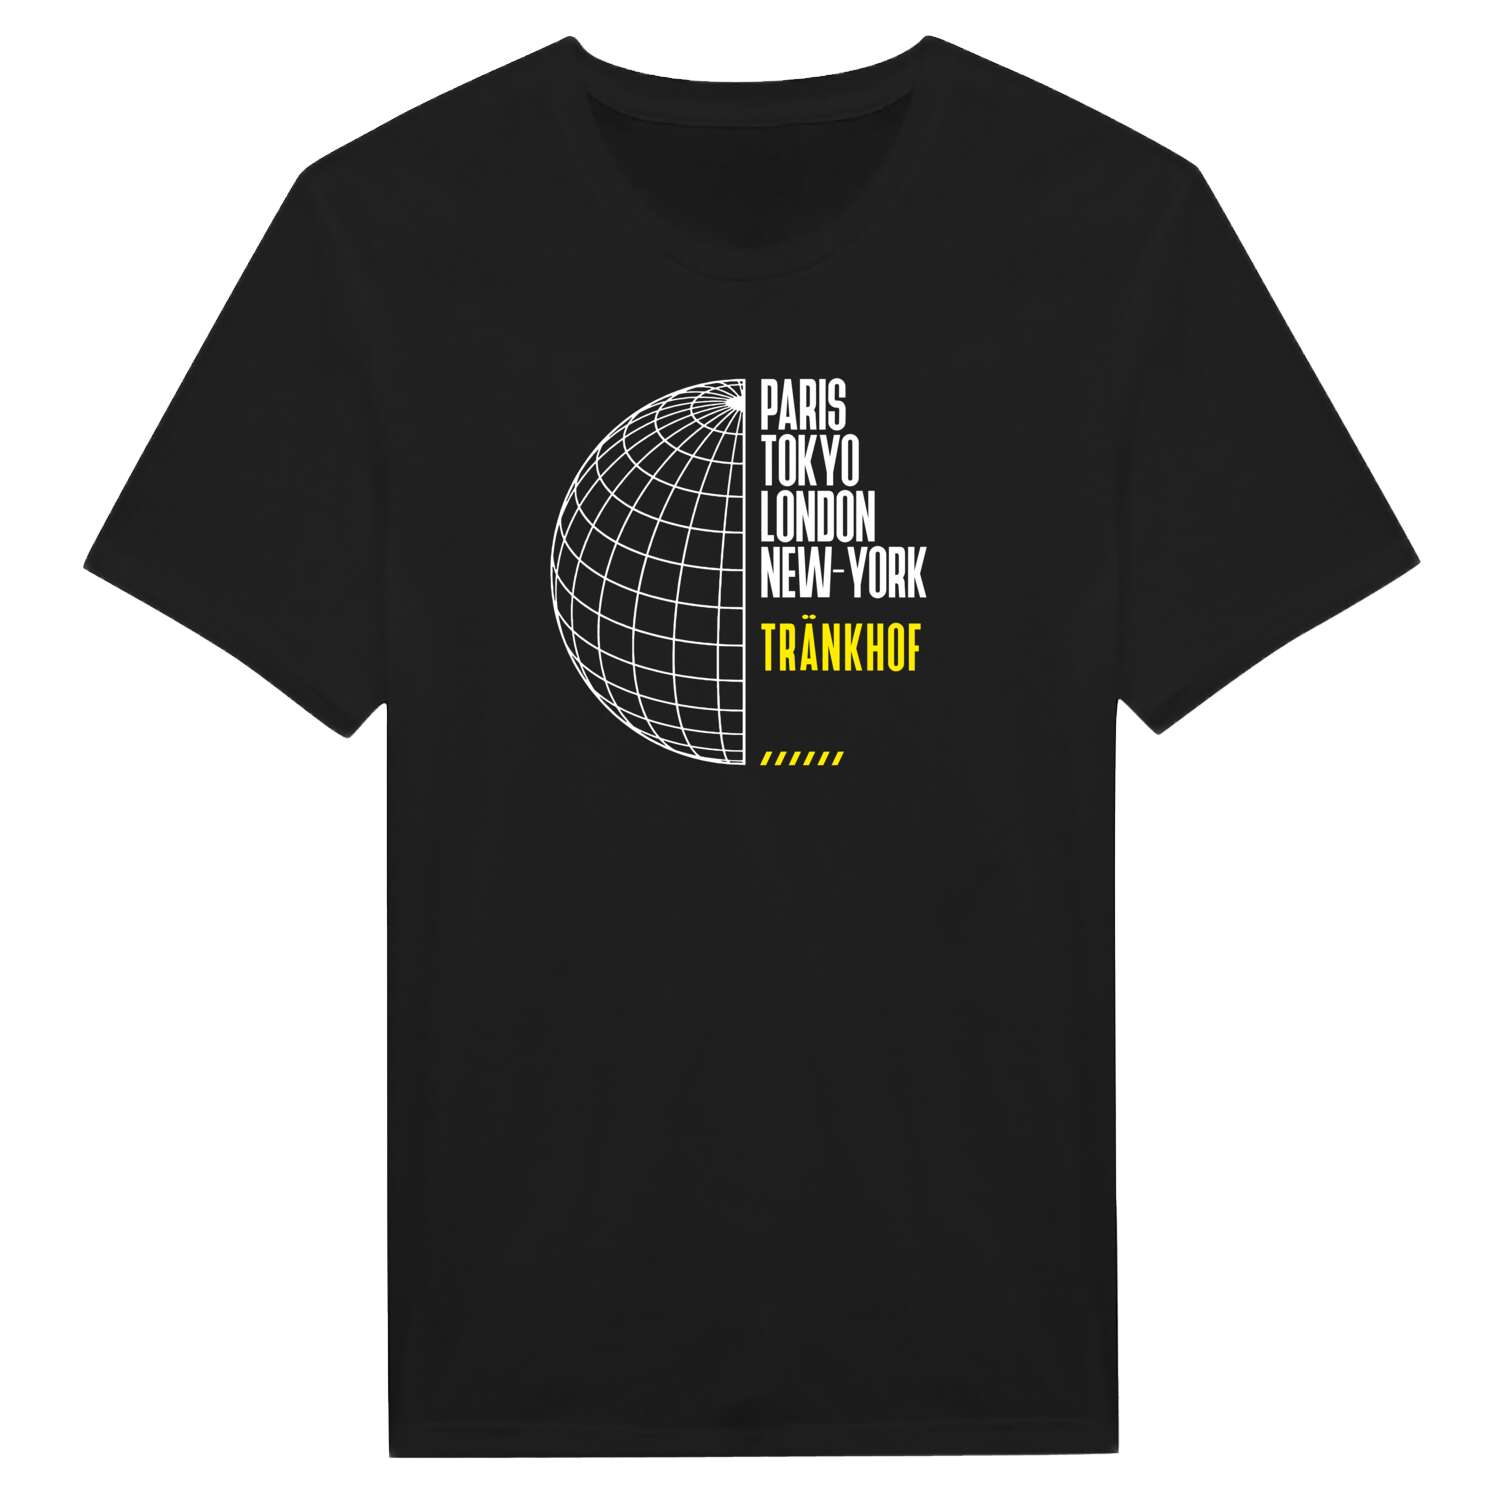 Tränkhof T-Shirt »Paris Tokyo London«